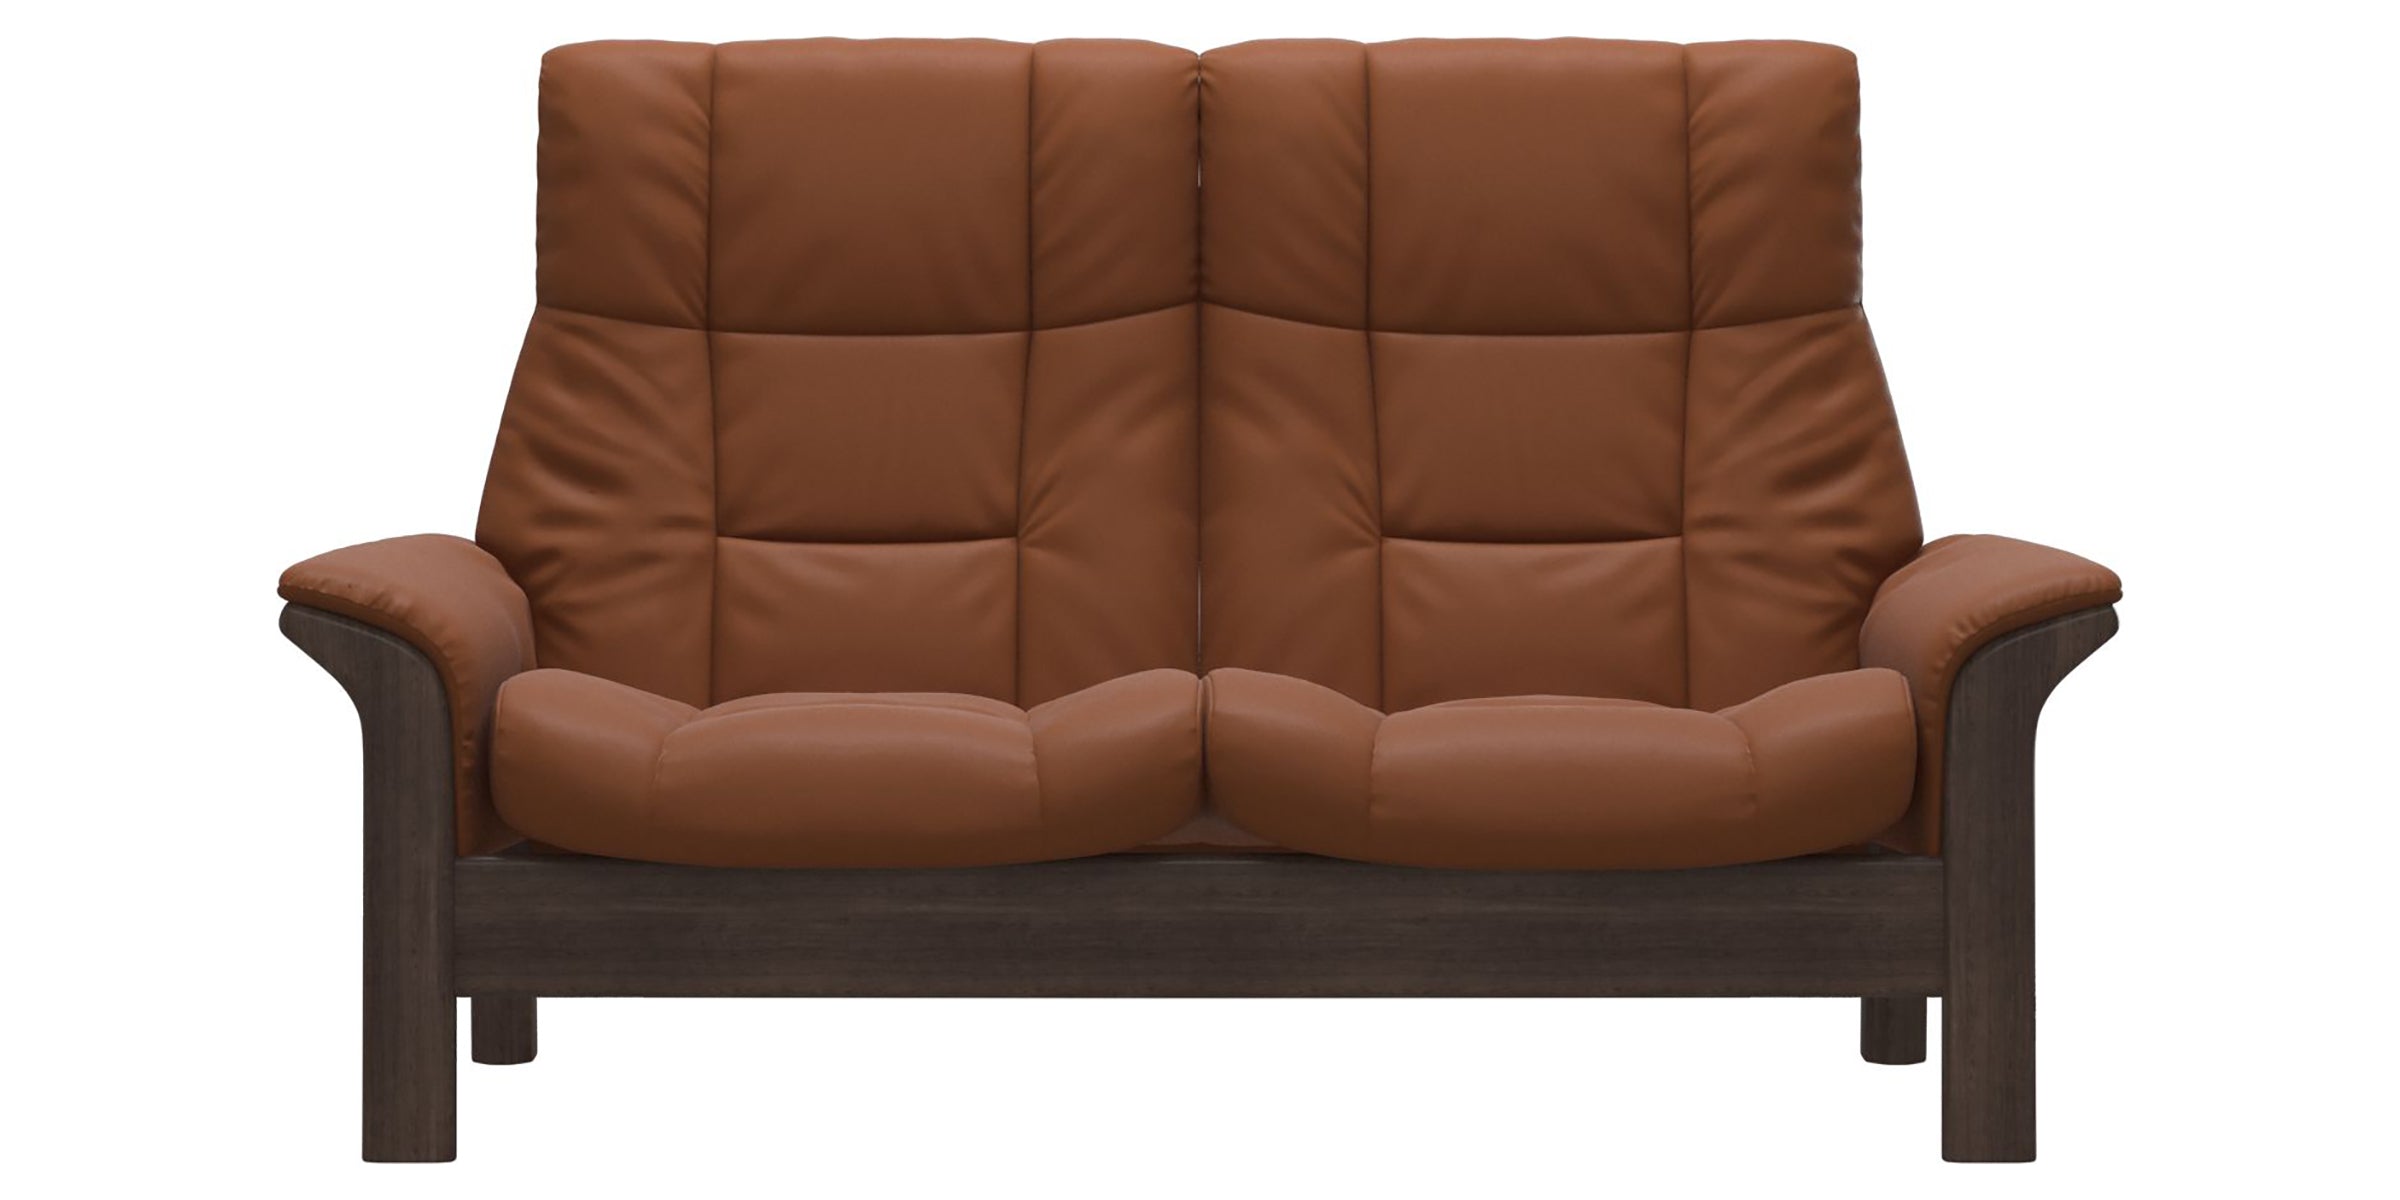 Paloma Leather New Cognac and Wenge Base | Stressless Buckingham 2-Seater High Back Sofa | Valley Ridge Furniture